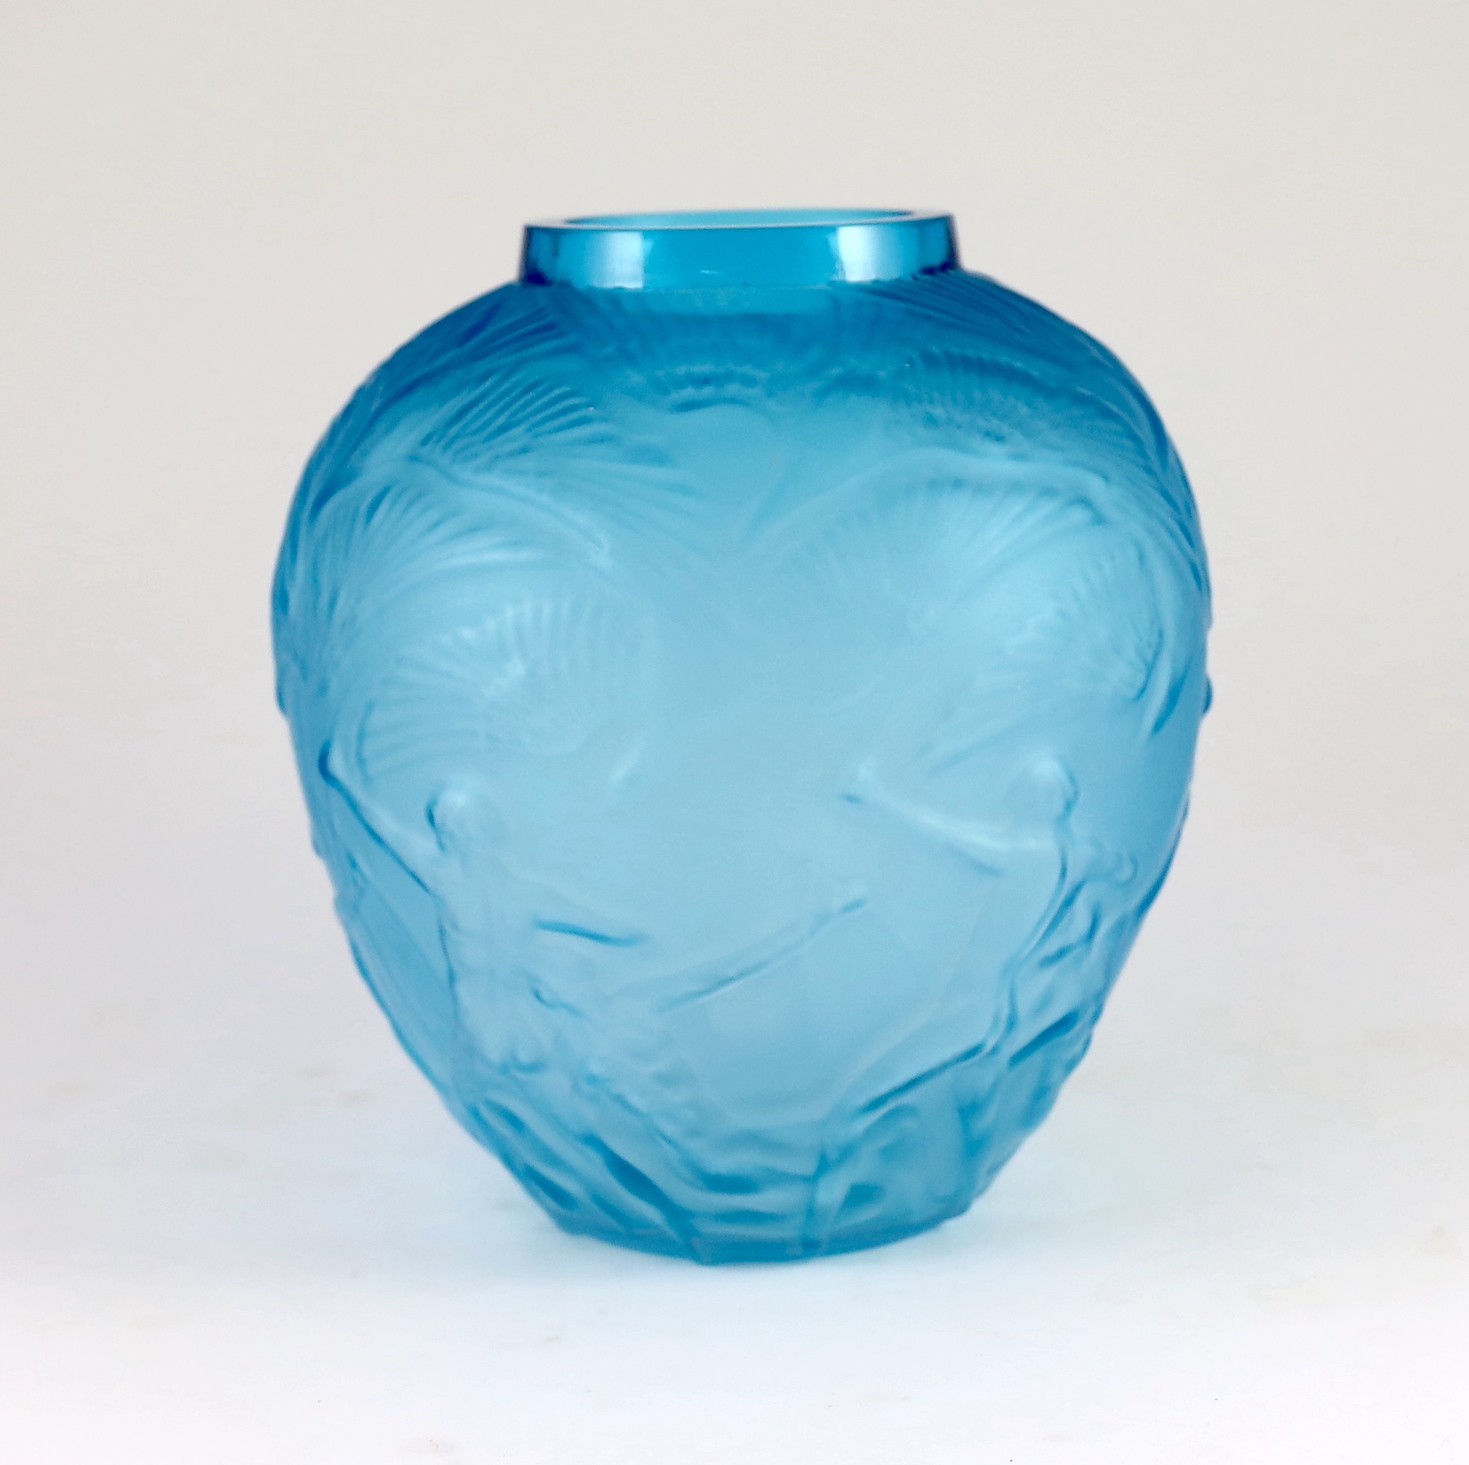 A Lalique style Archers pattern blue glass vase, 26cms high